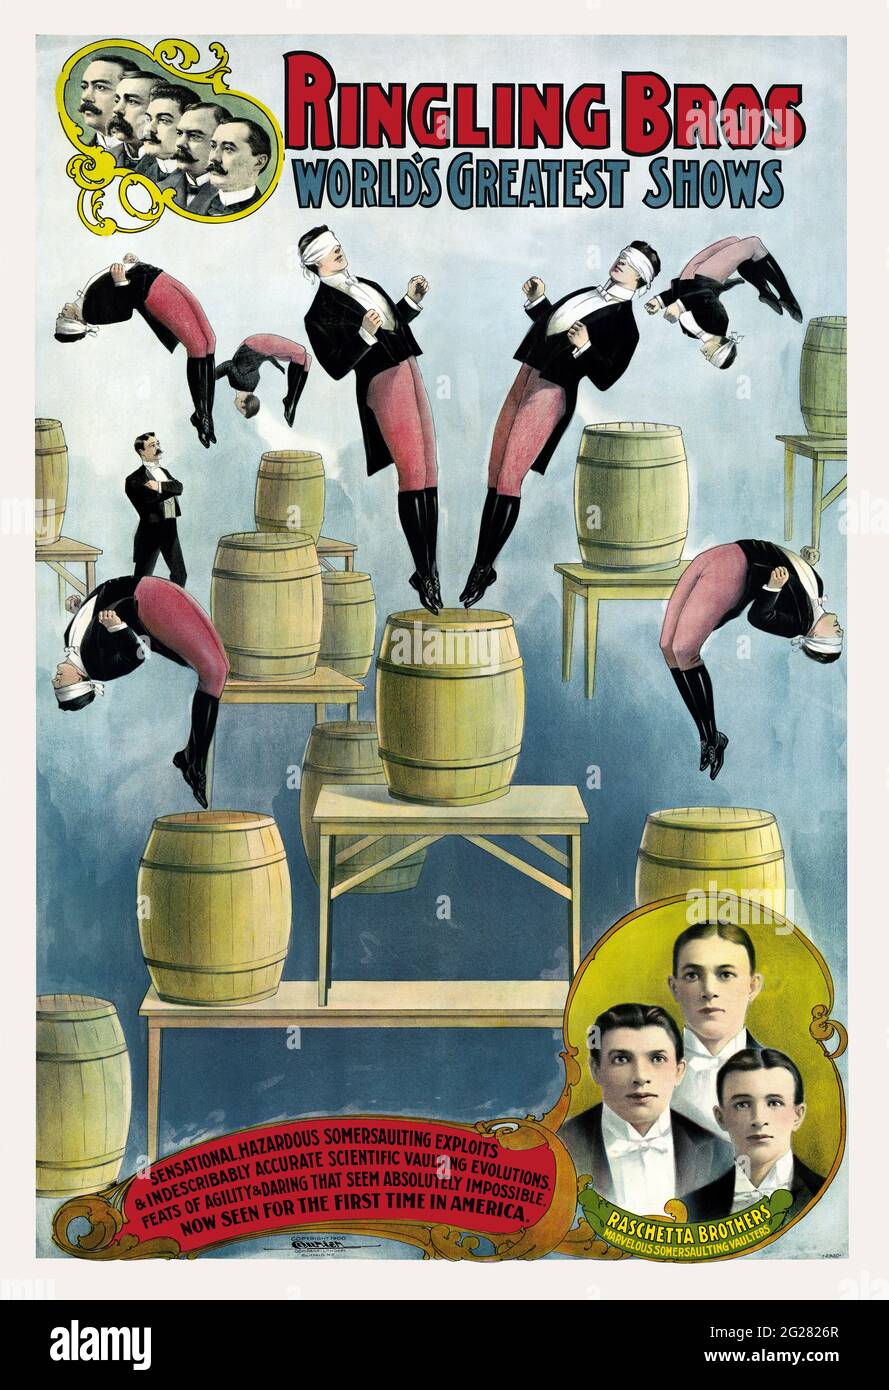 Vintage Ringling Bros. Zirkusposter mit den Raschetta-Brüdern und samersaulting Vaulters. Stockfoto